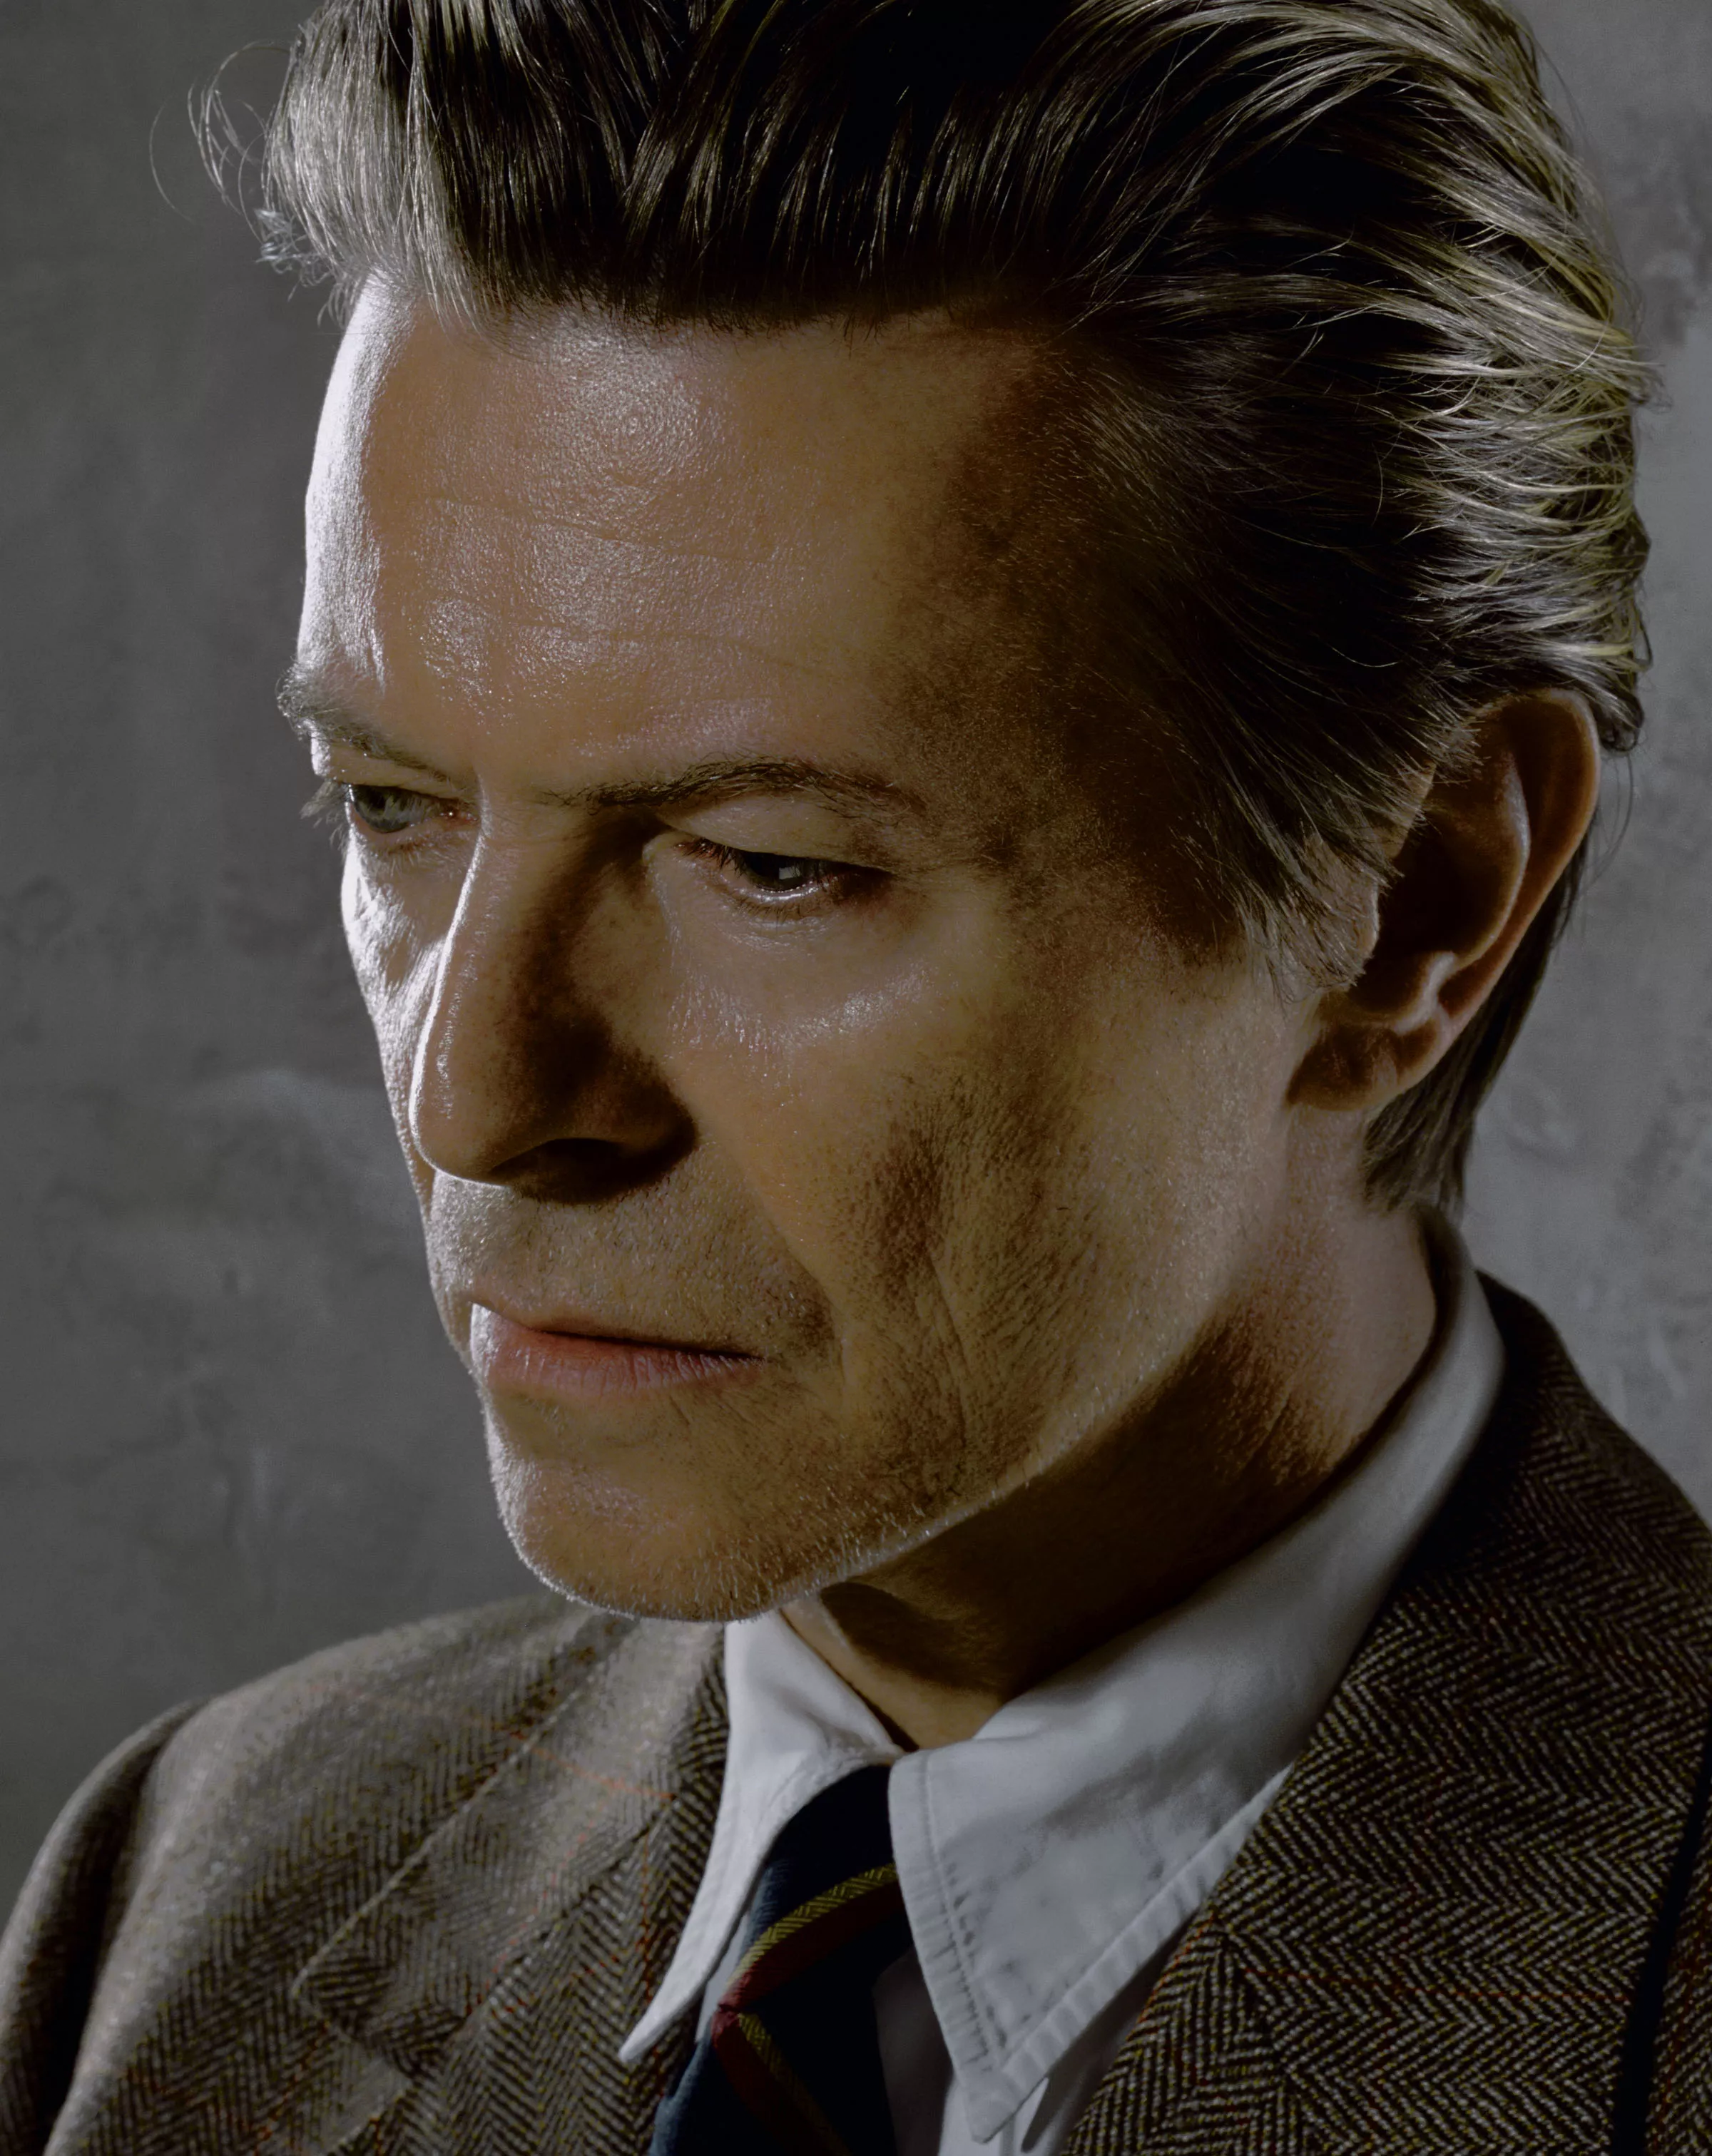 Les GAFFAs siste intervju med Bowie - om det viktigste i livet